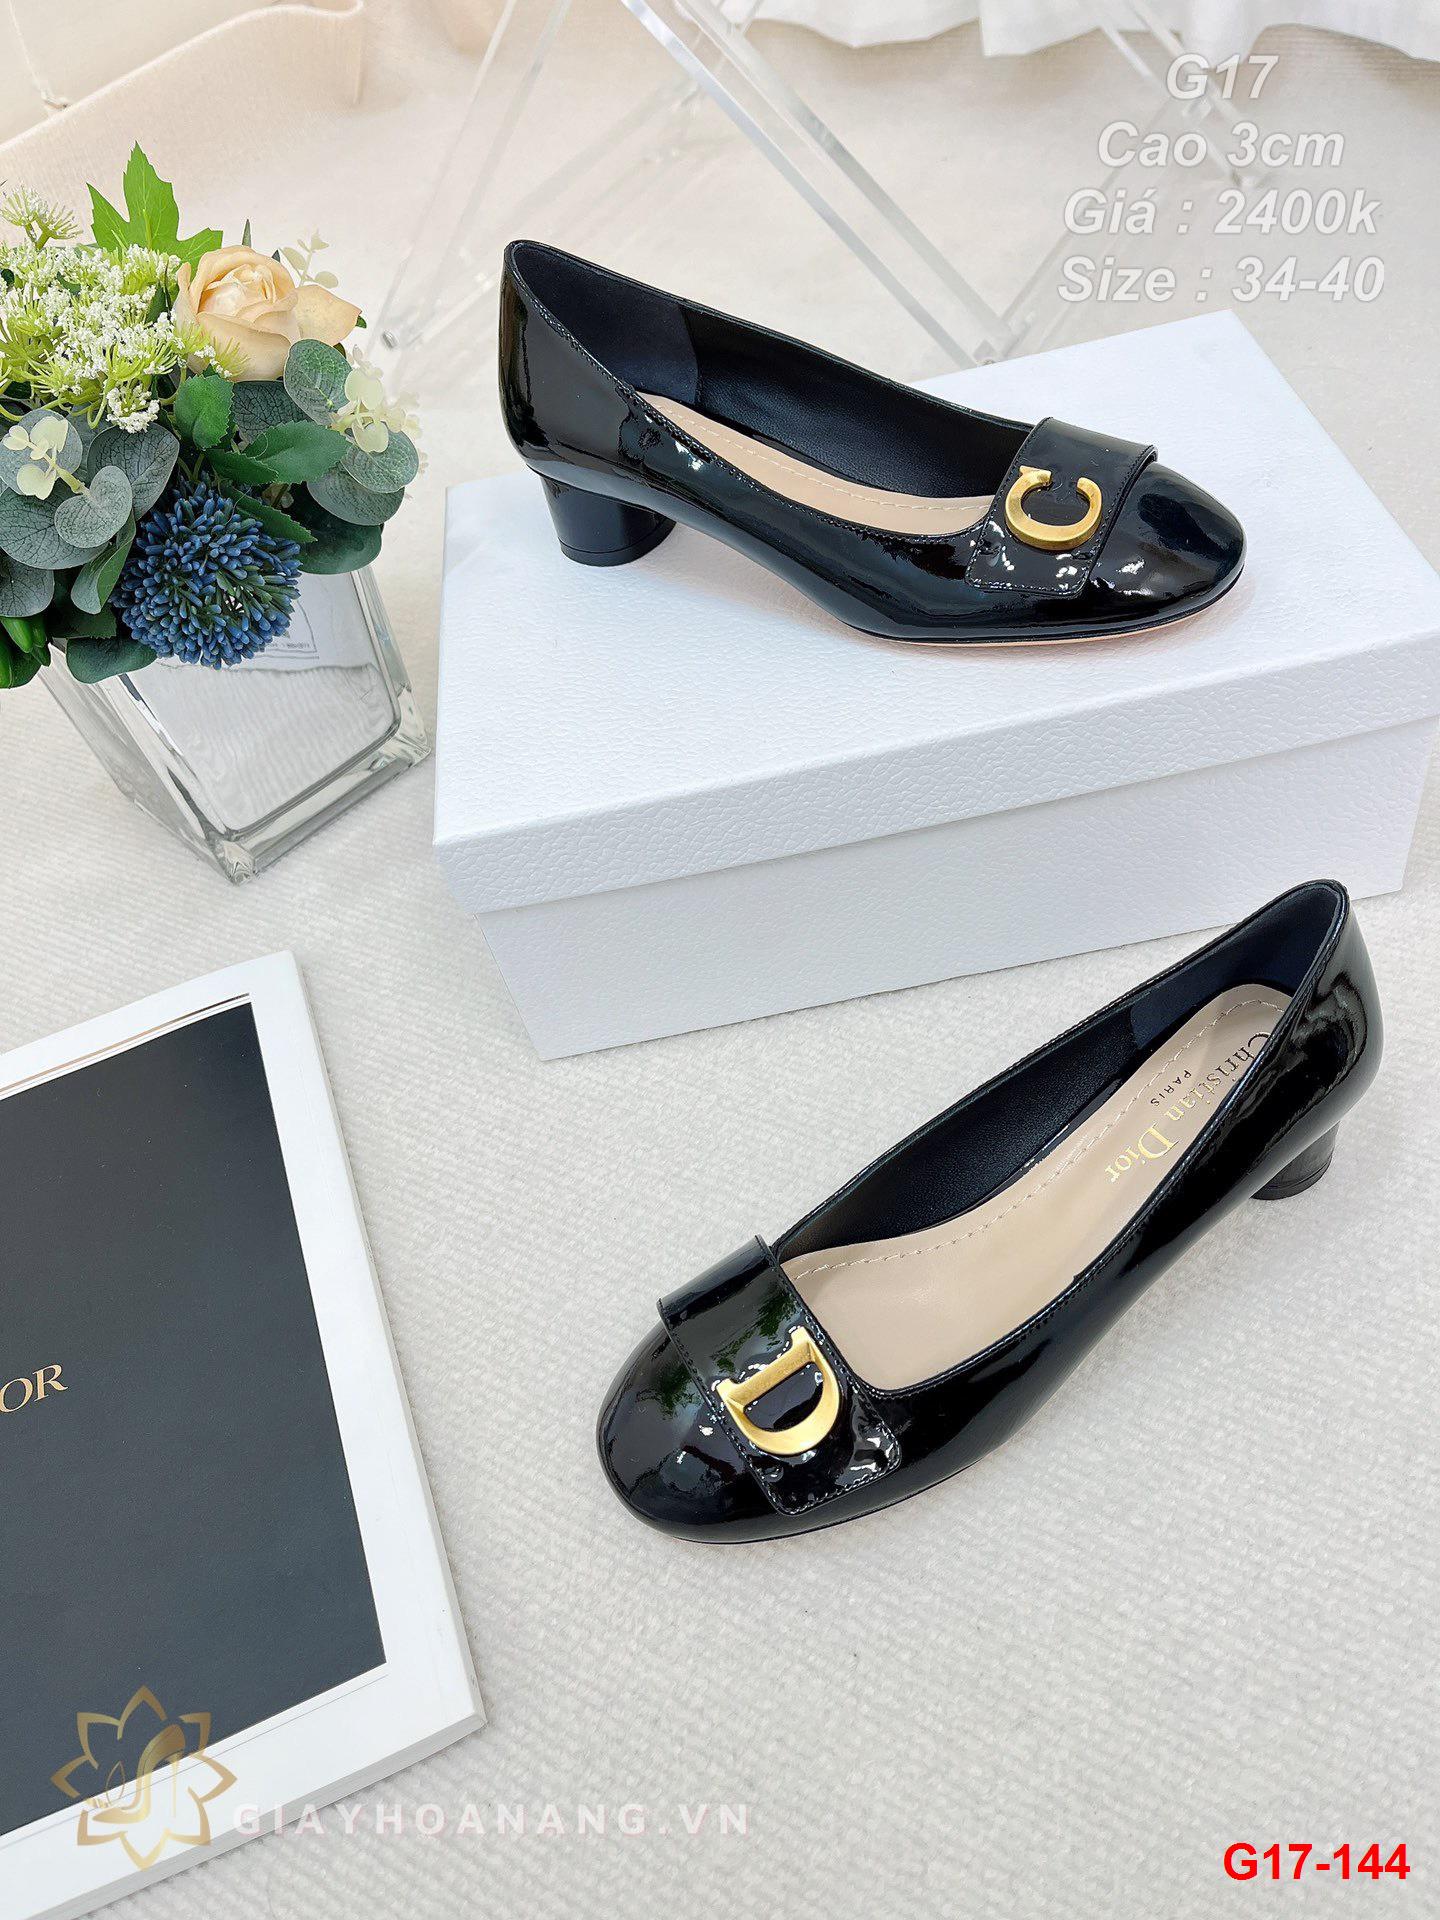 G17-144 Dior giày cao 3cm siêu cấp